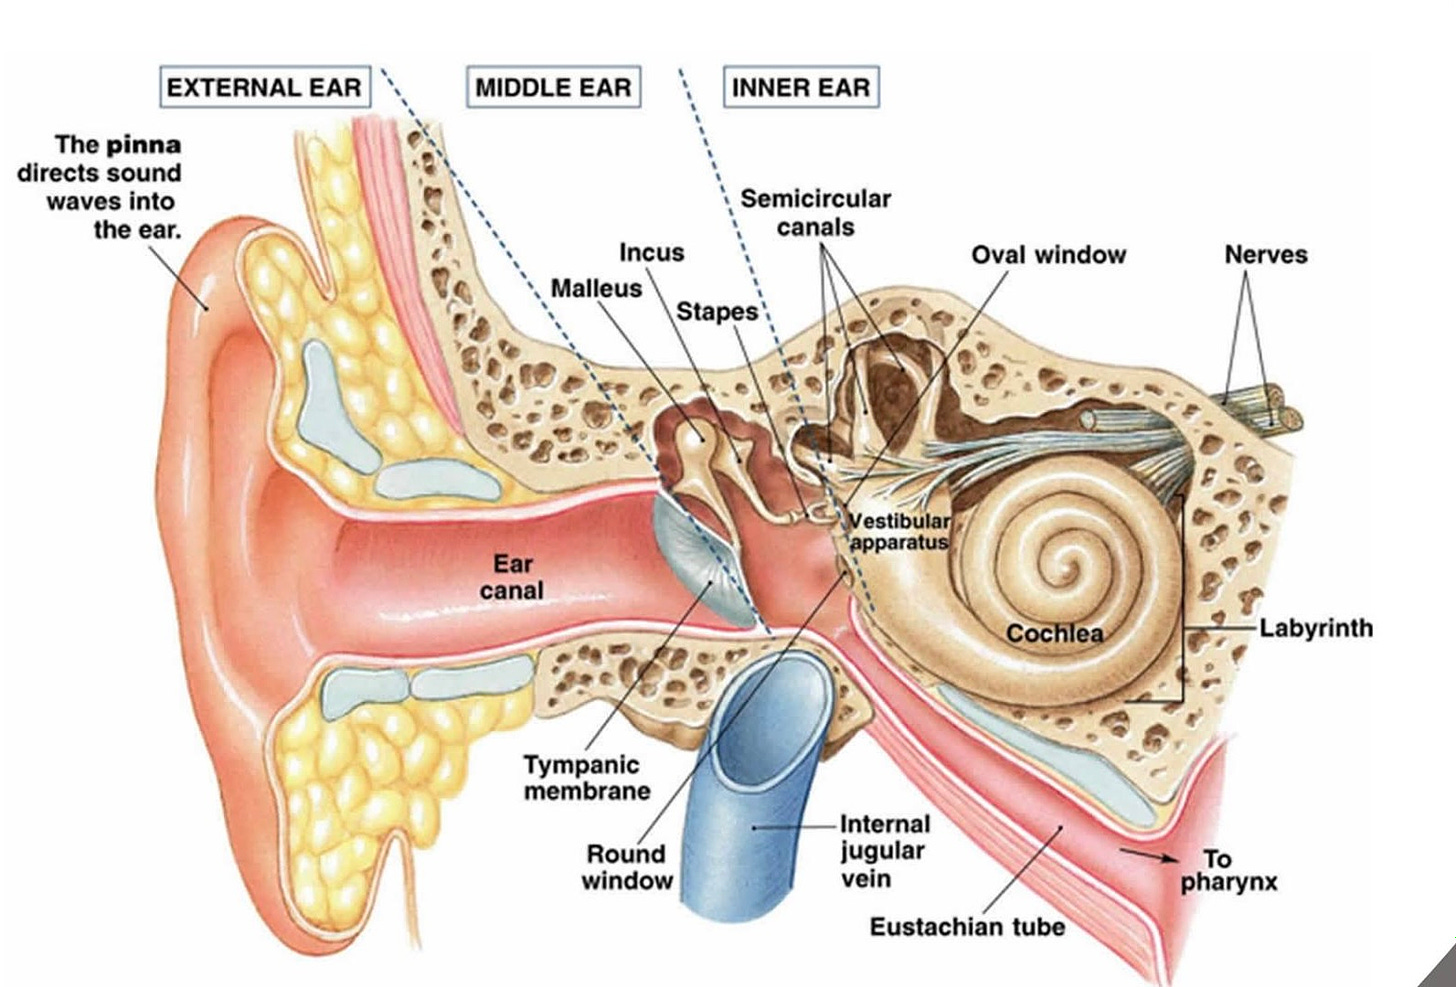 A diagram of the inner ear and its vestibular organs.